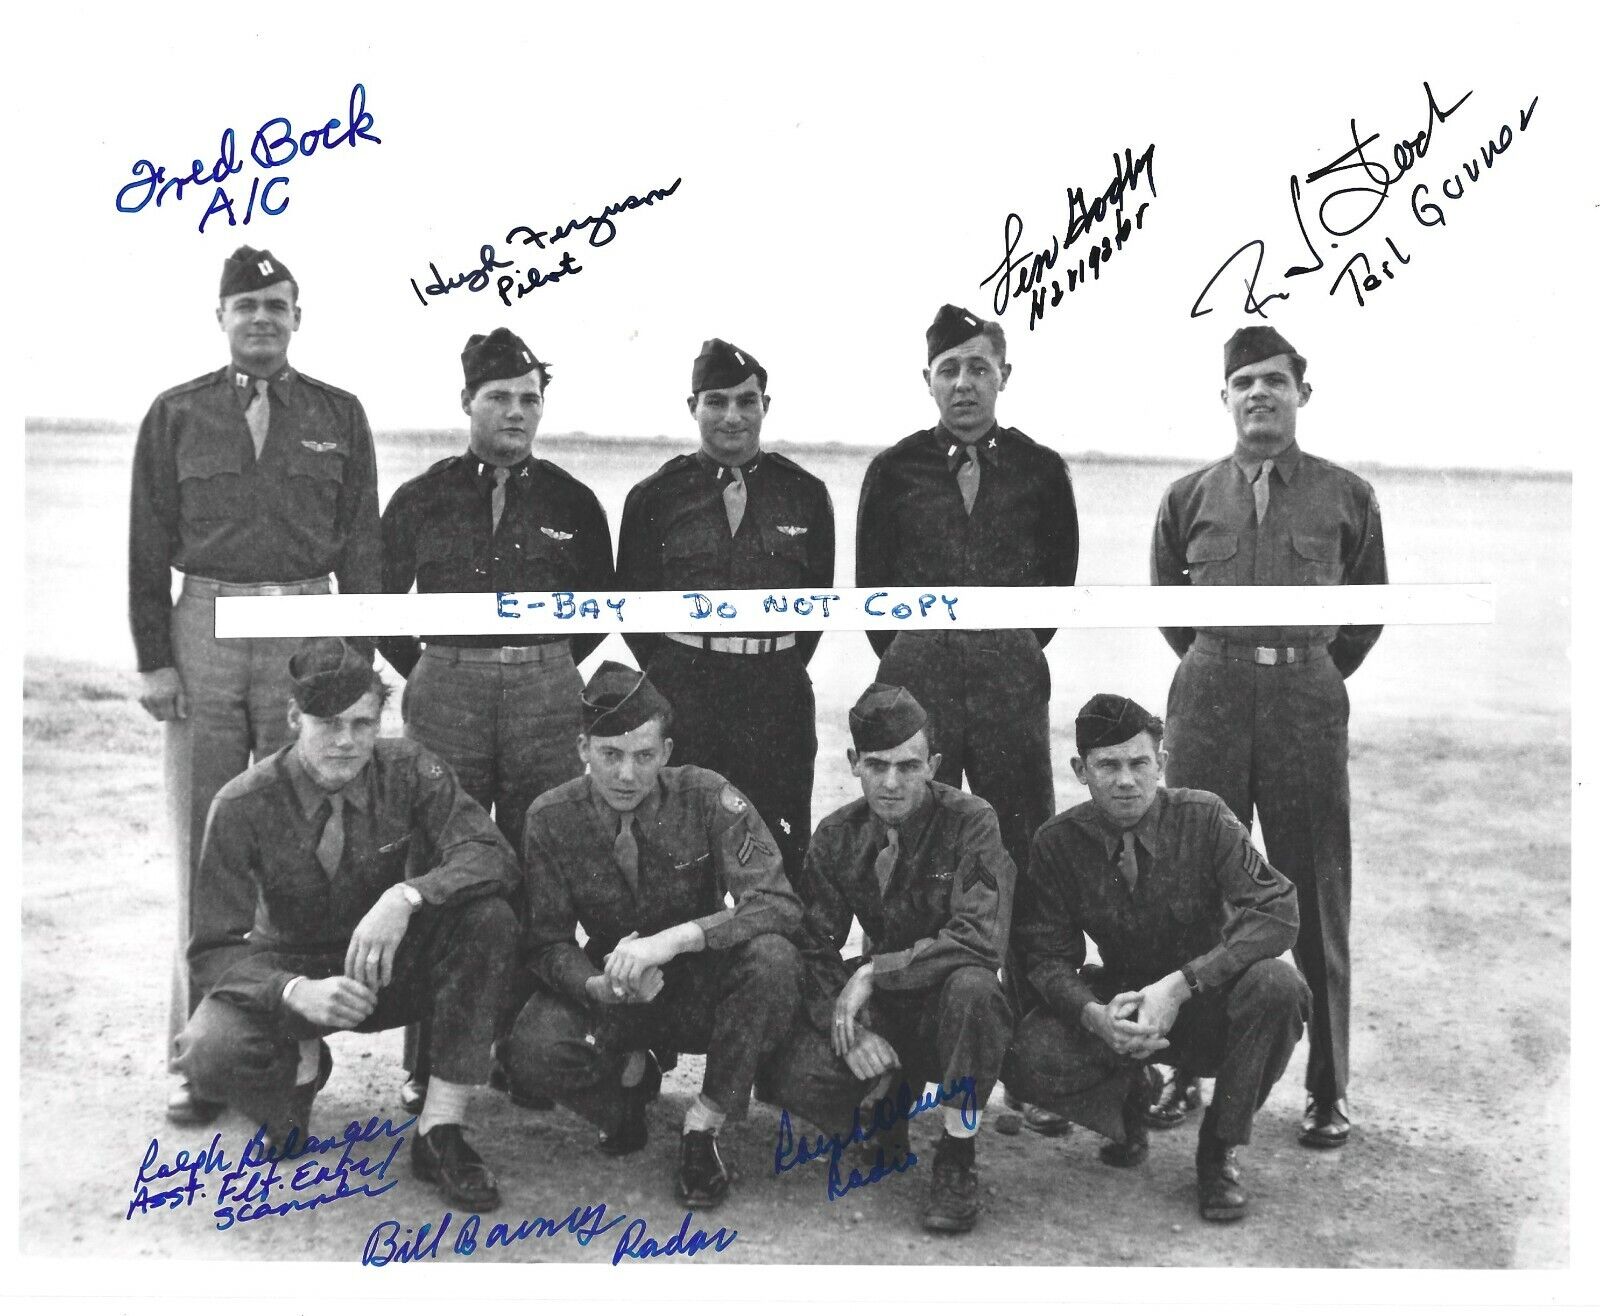 Bockscar,Great Artiste,Crew C-13, Photo 509th Composite Group,Nagasaki,Hiroshima